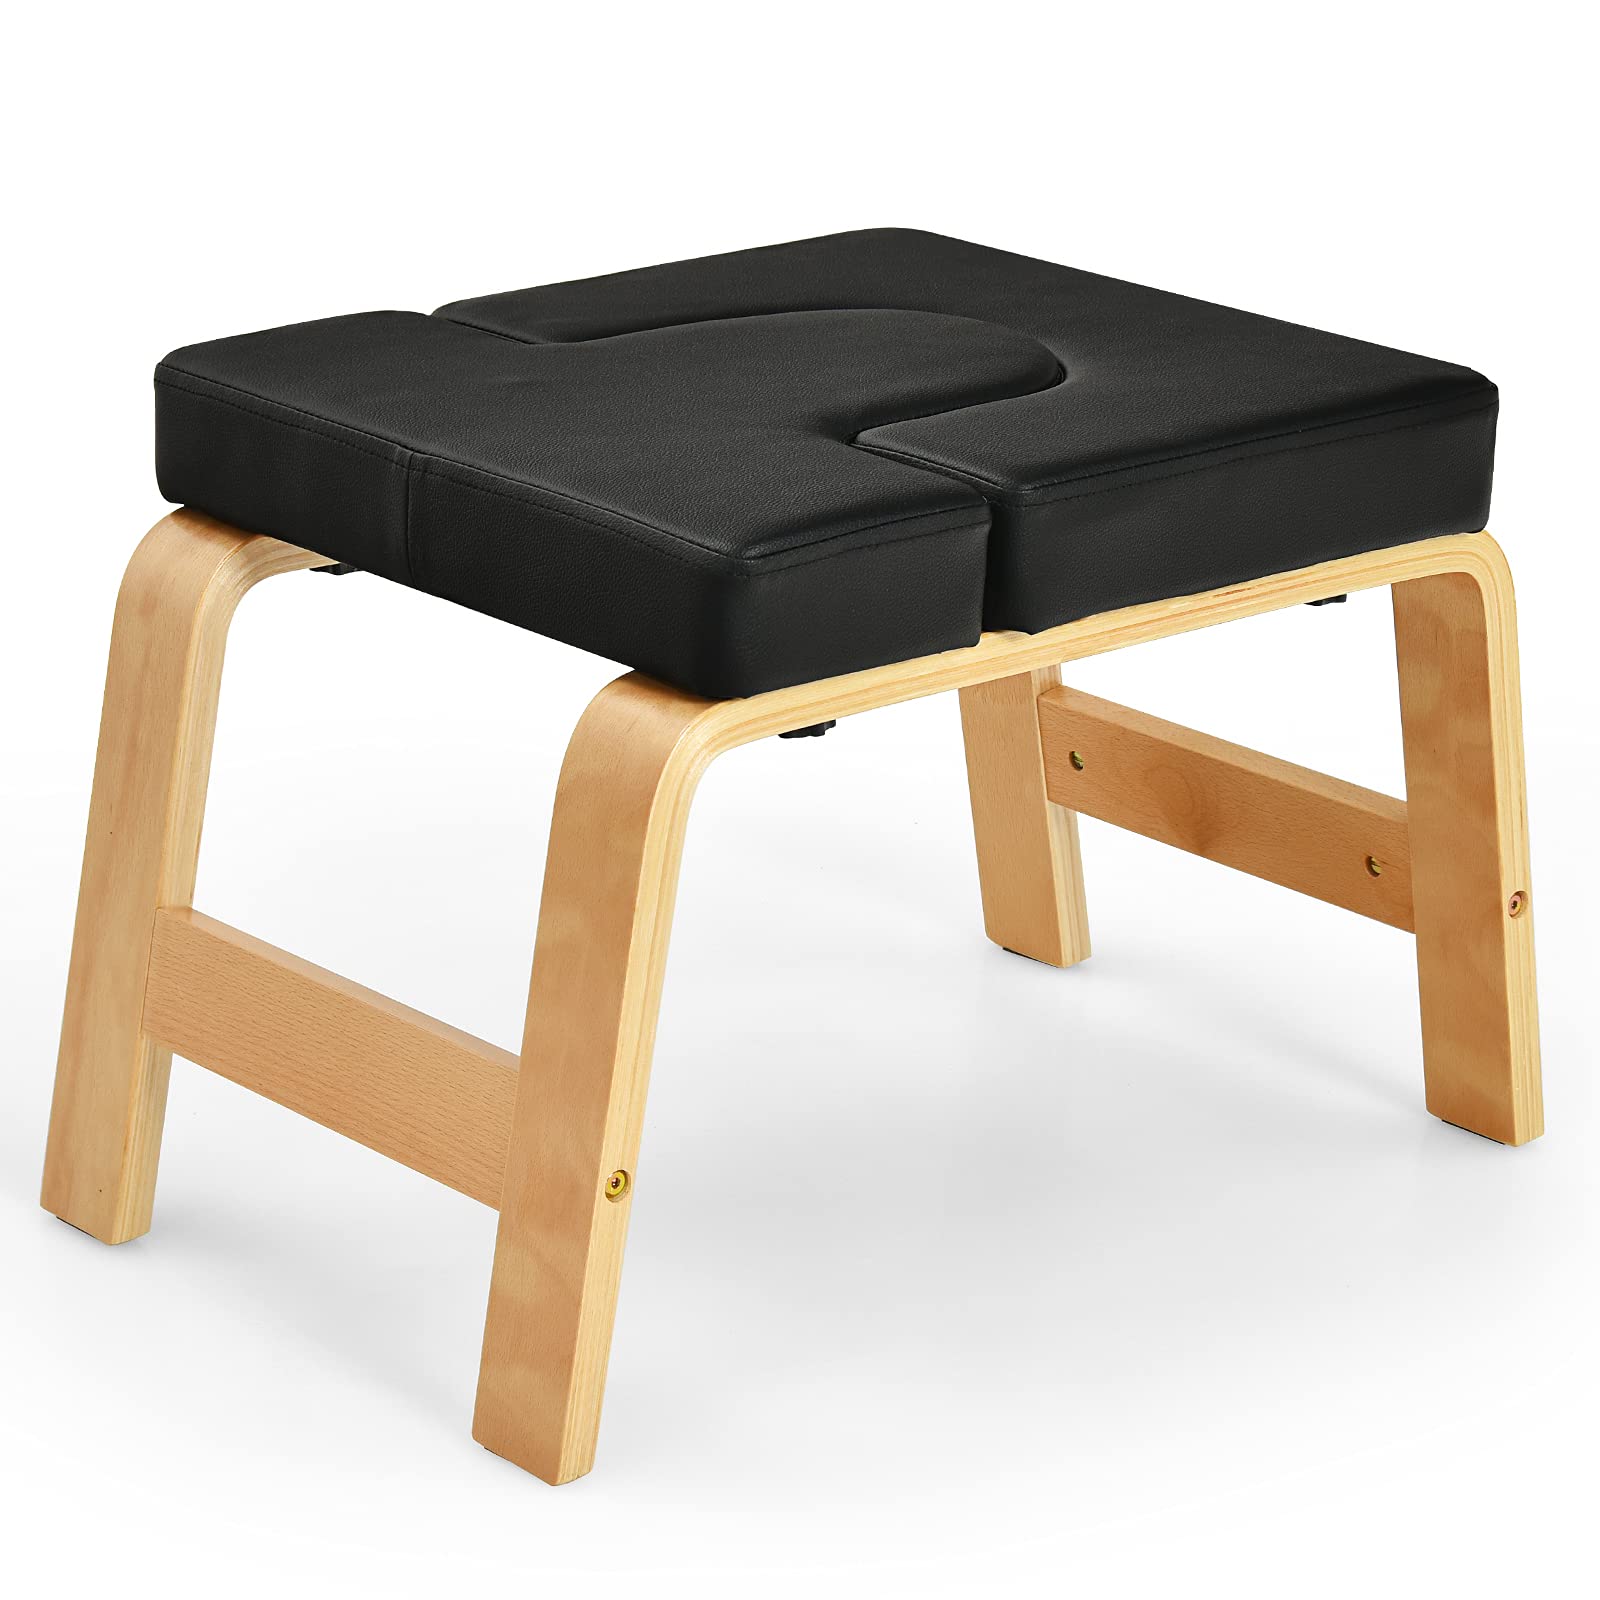 Giantex Yoga Headstand Bench, Upside Down Chair for Balance Training